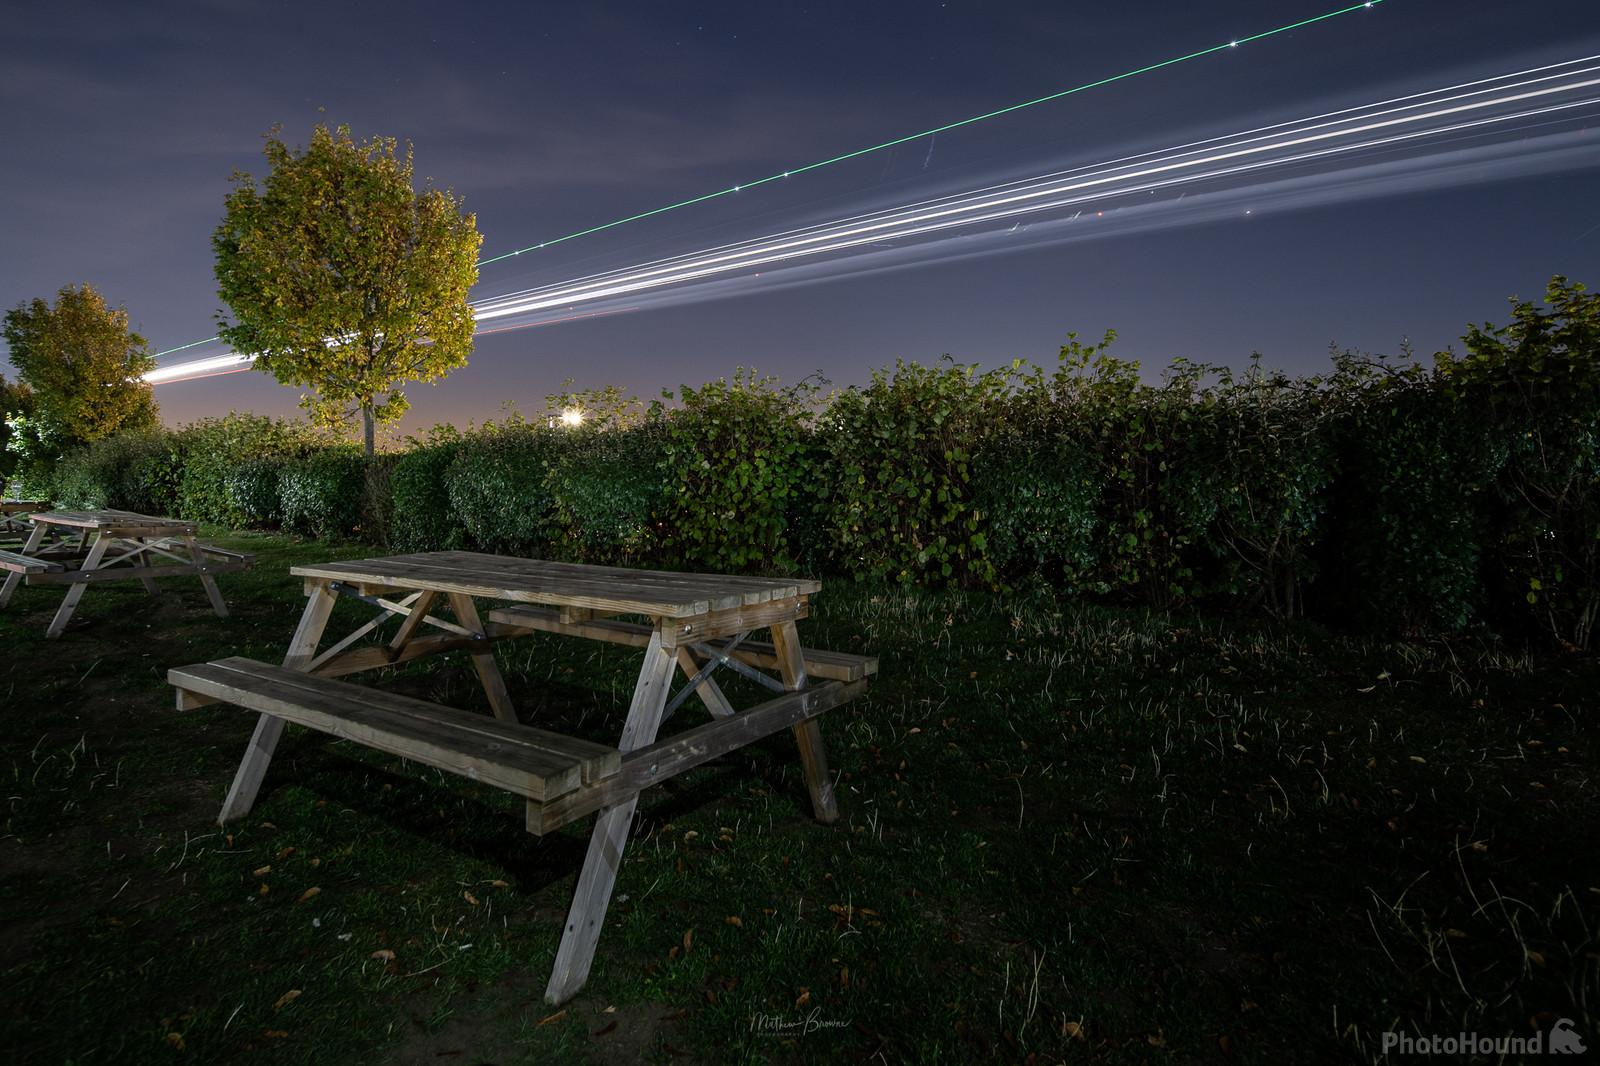 Image of Planespotting @ Premier Inn Heathrow by Mathew Browne